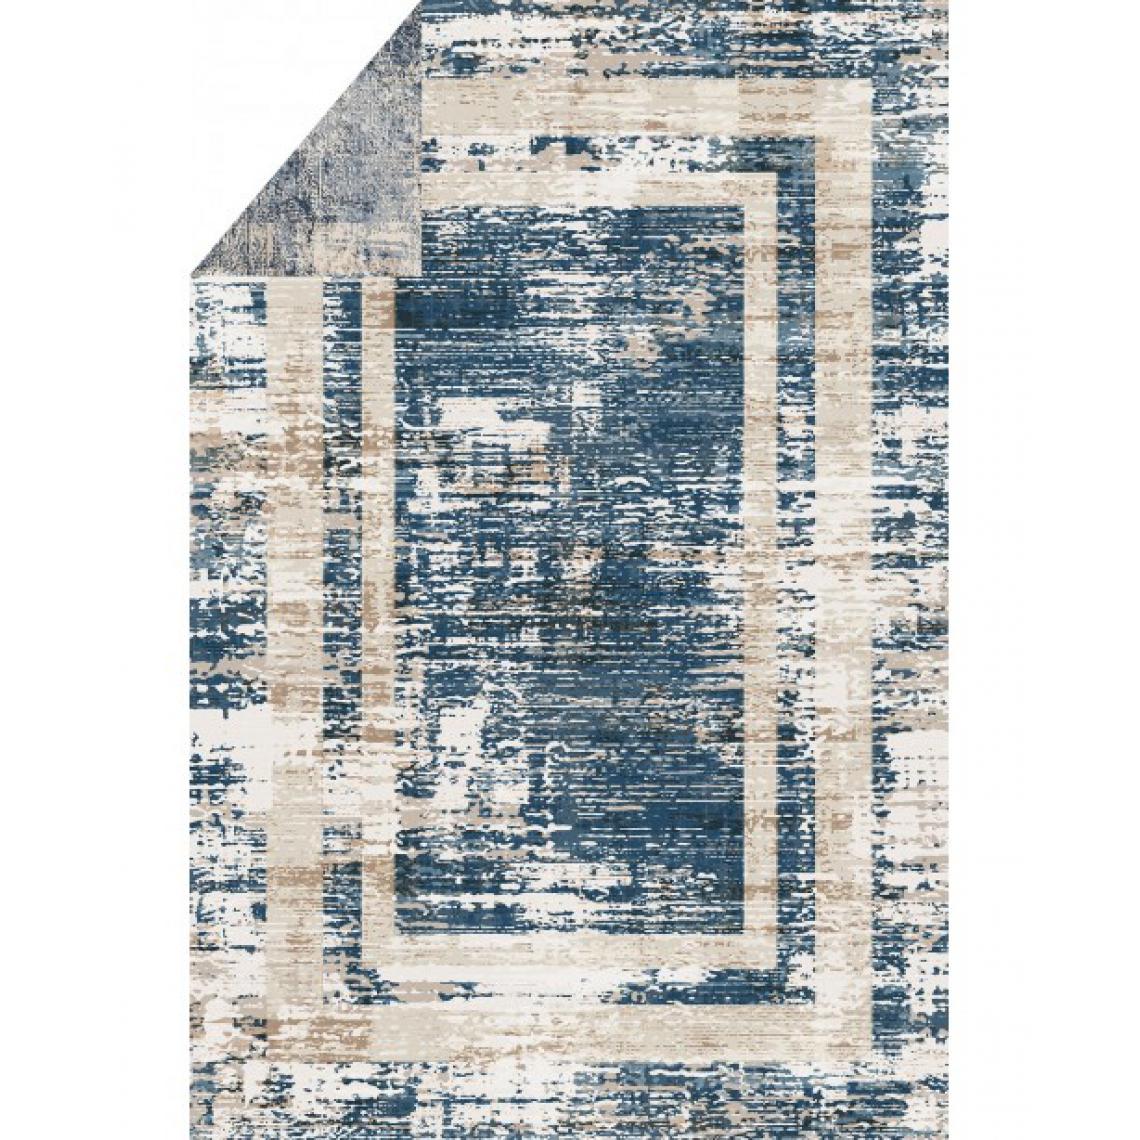 Mani Textile - Tapis Réversible Bleu - Tapis